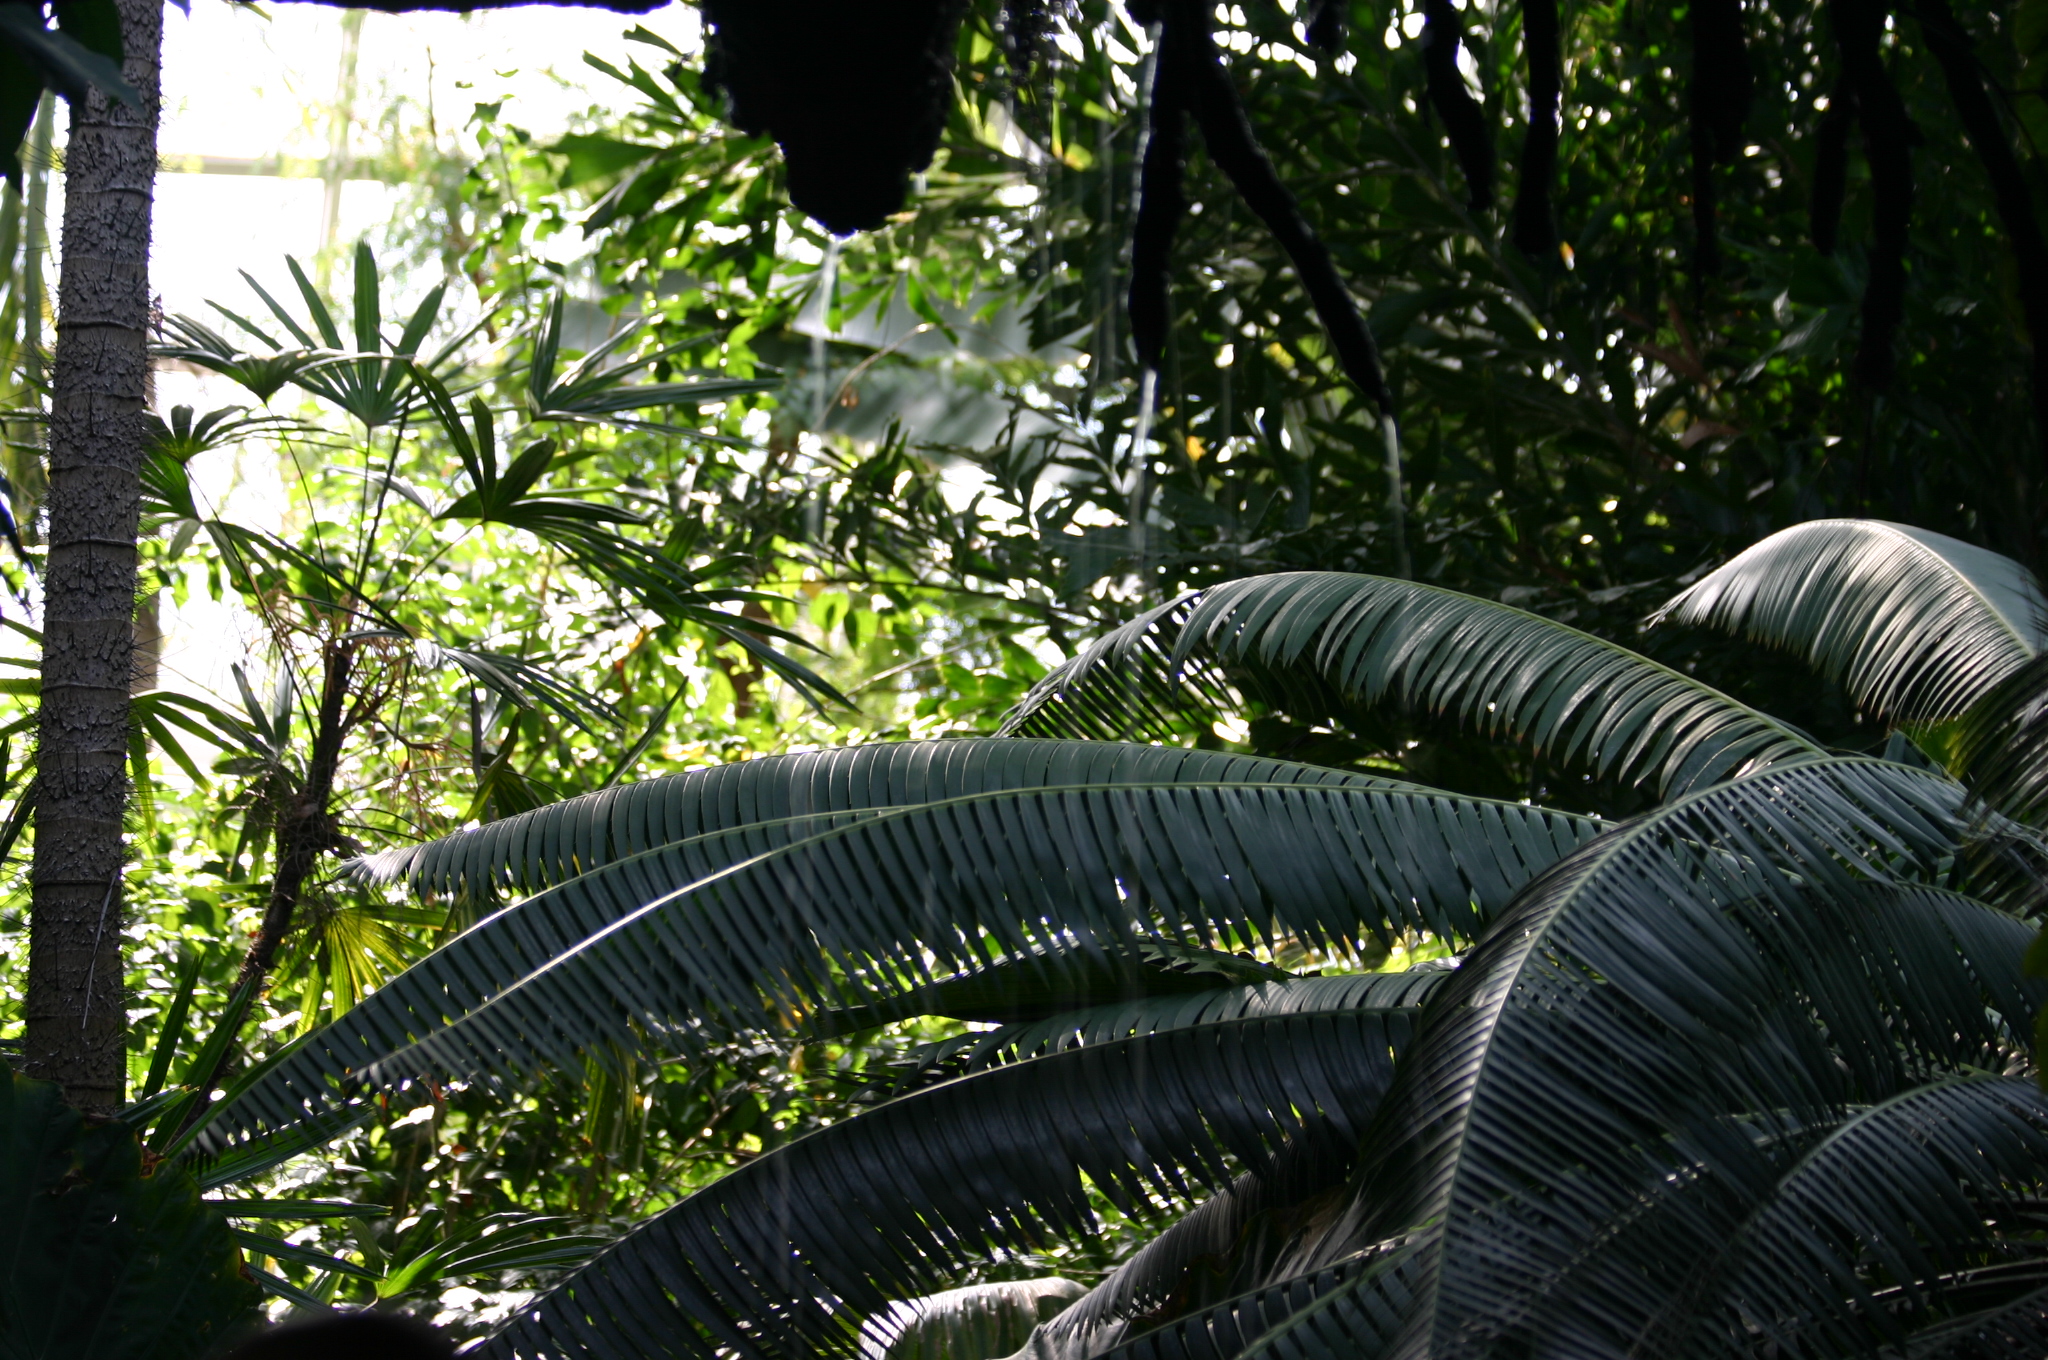 jungle plants are seen near a window as seen through the window